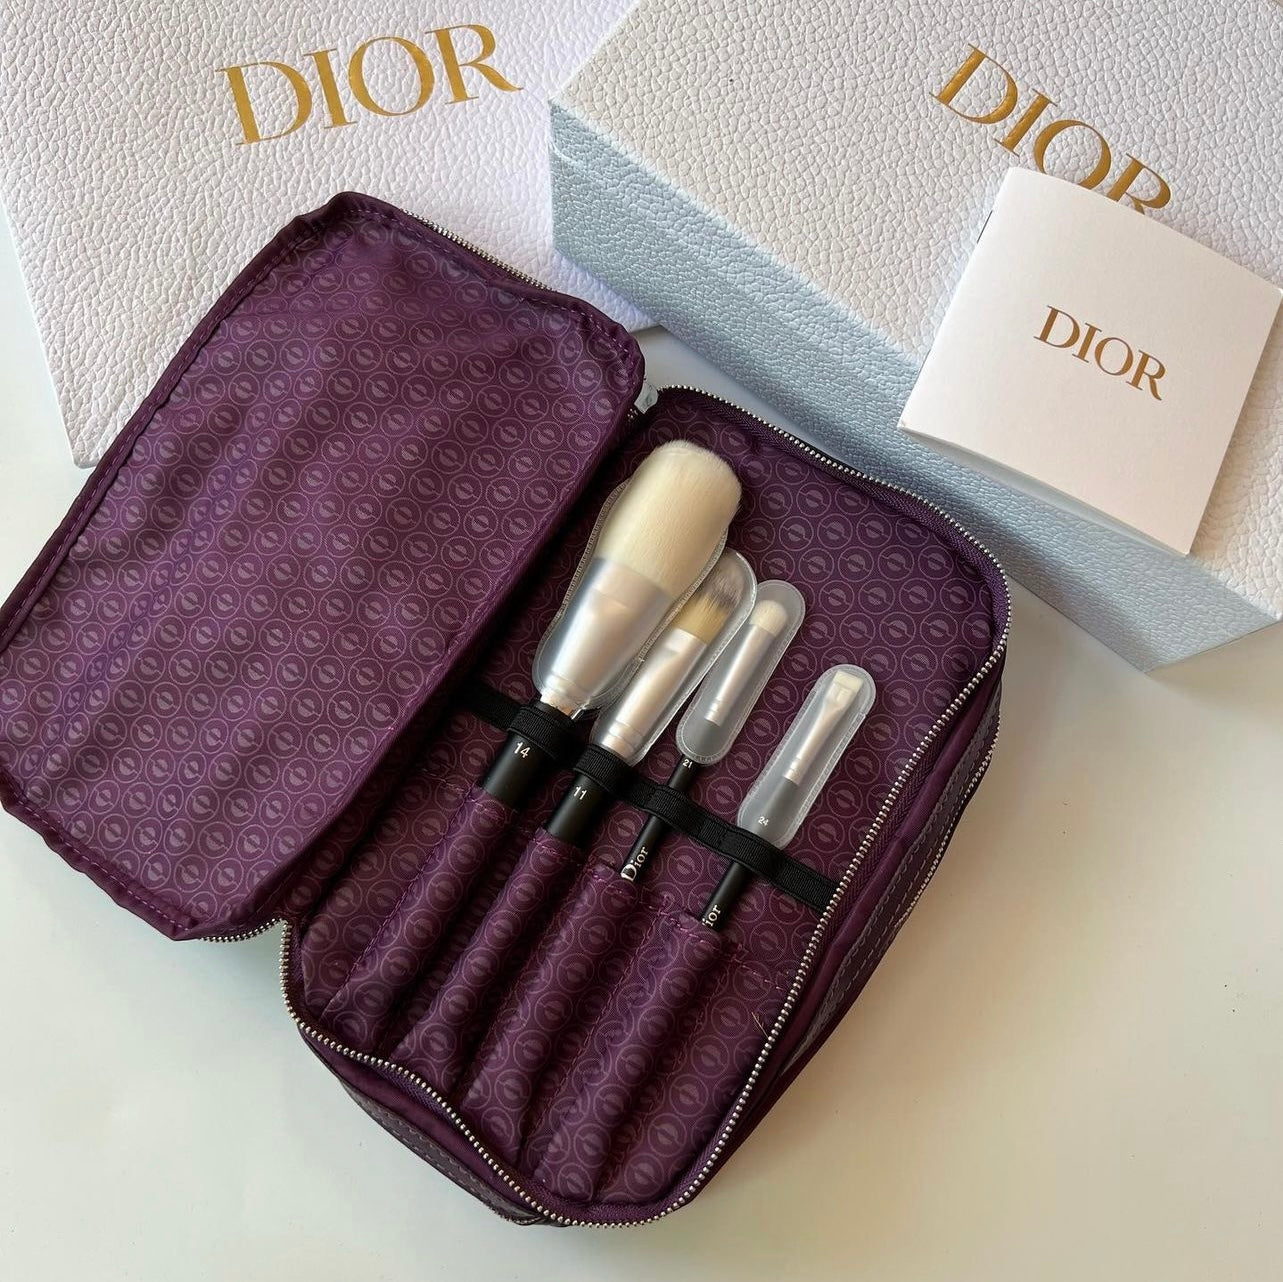 Dior Backstage Makeup Brush Set with Travel Vanity Case